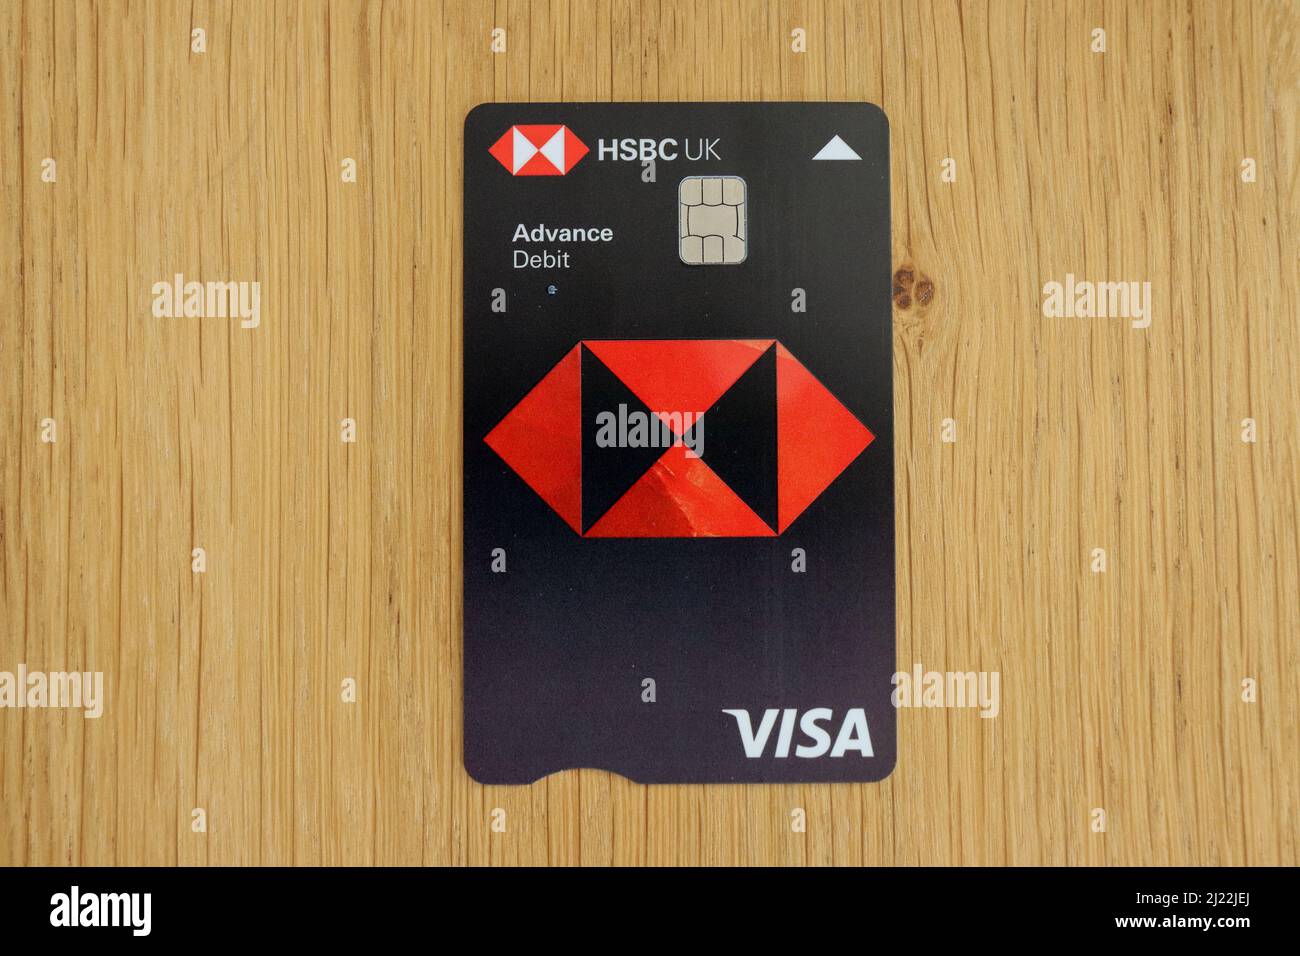 HSBC UK Advance Debit Card Stock Photo